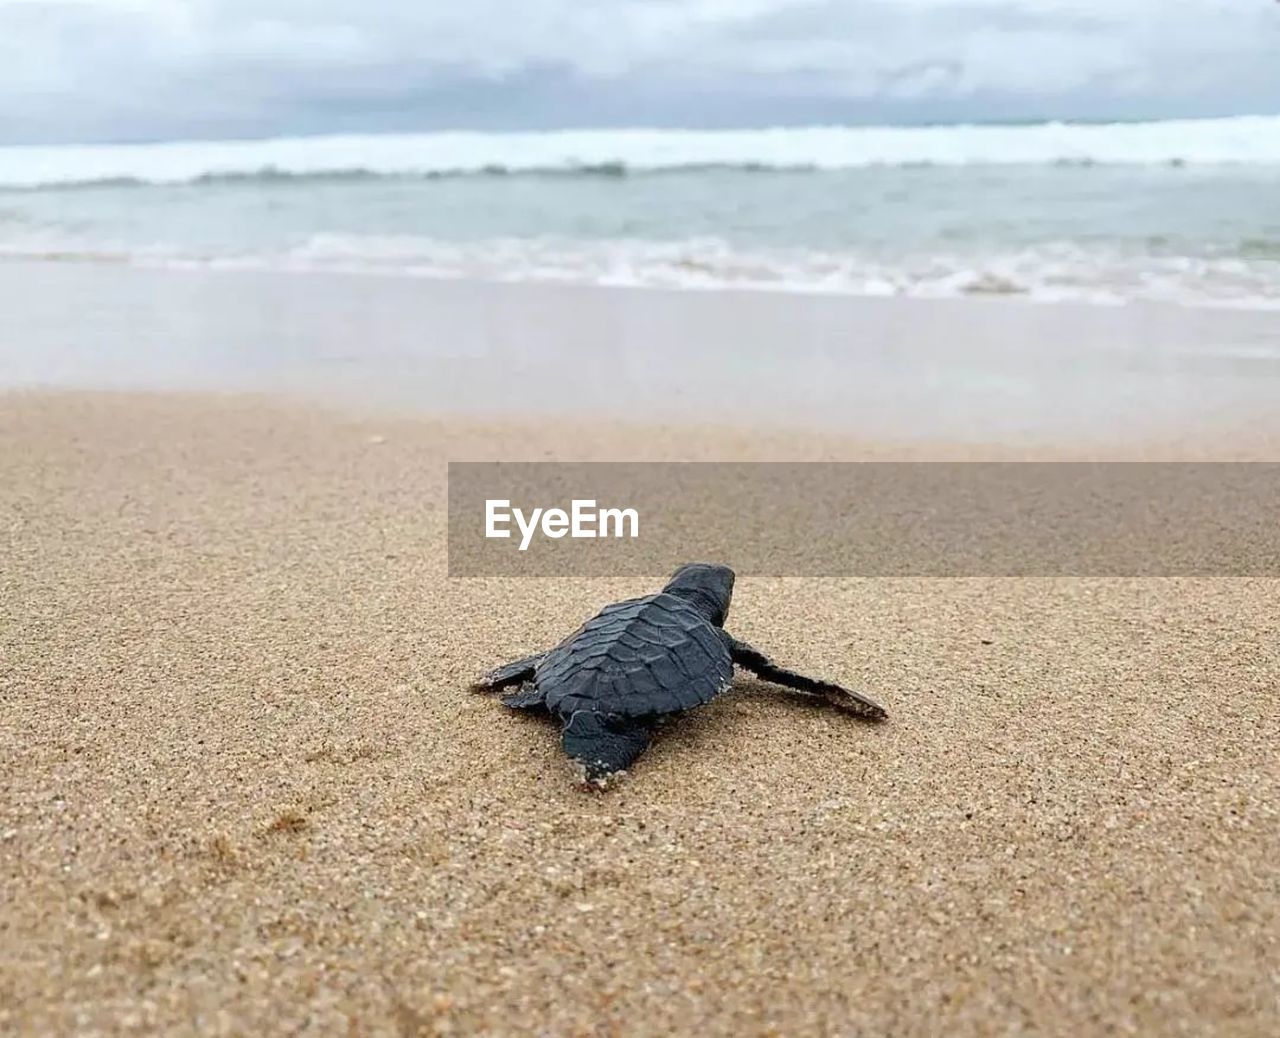 Turtle on sand at beach